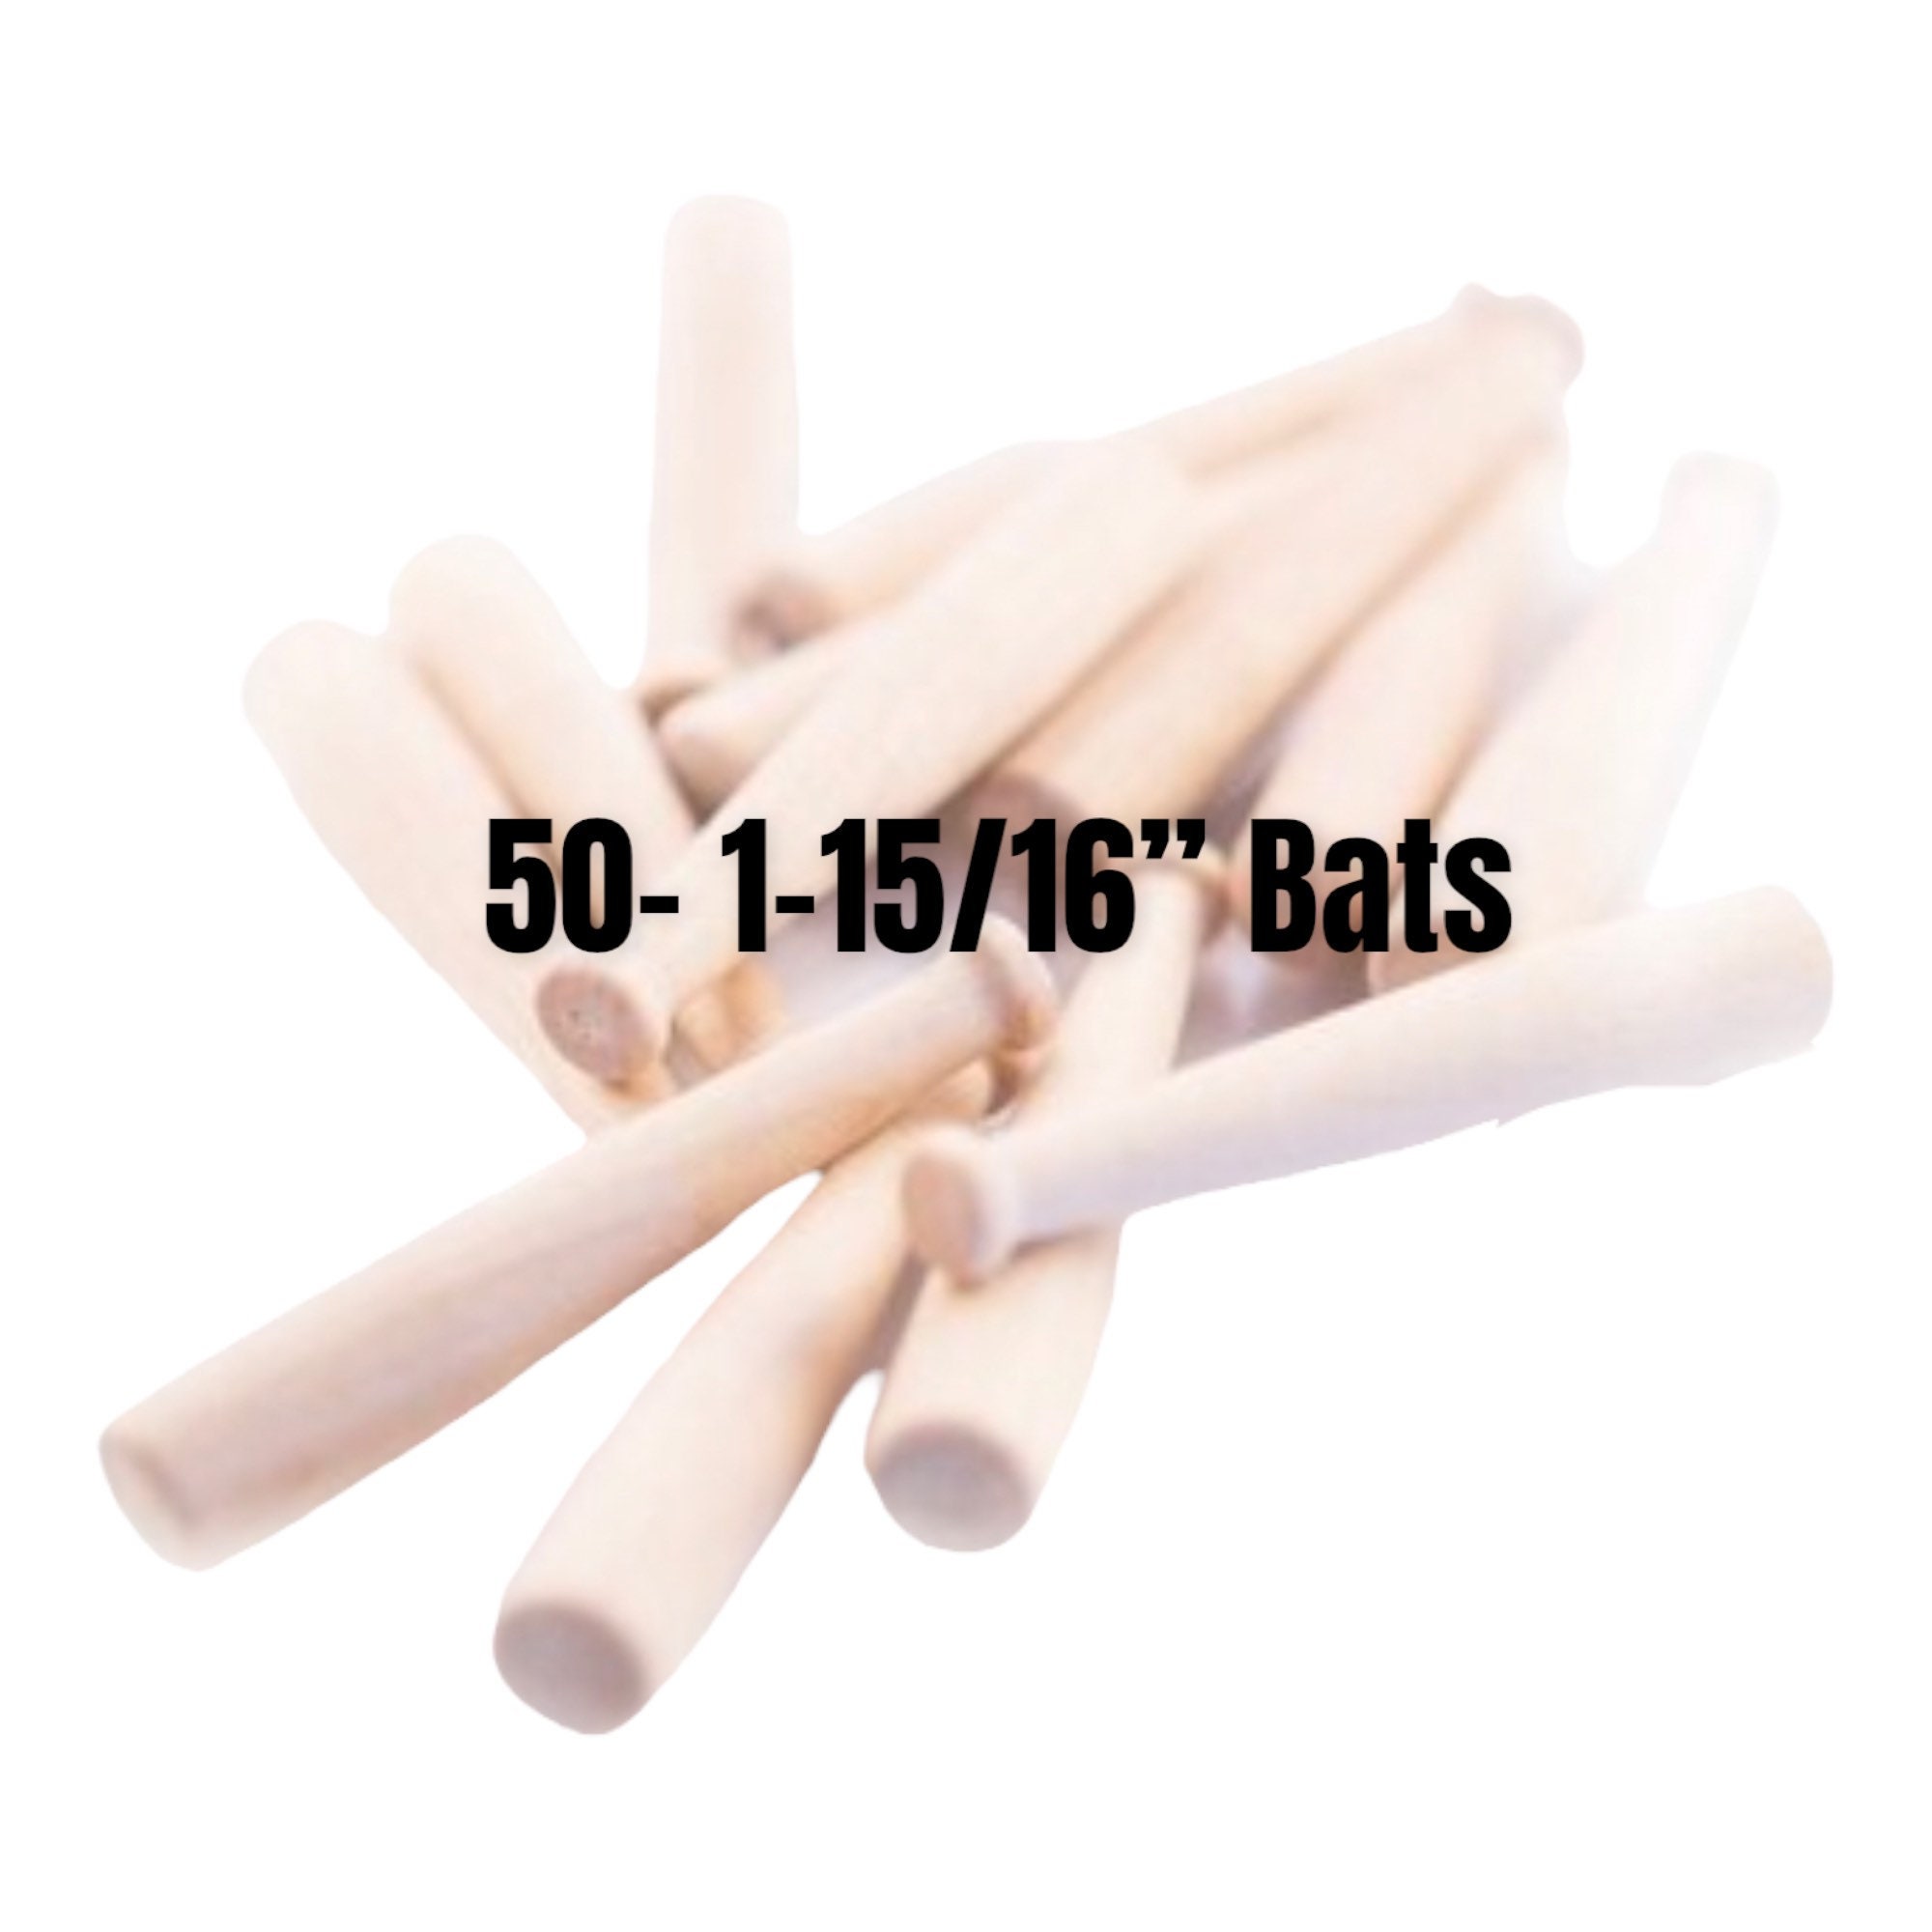 18 Mini Wood Baseball Bat - B1018 - IdeaStage Promotional Products